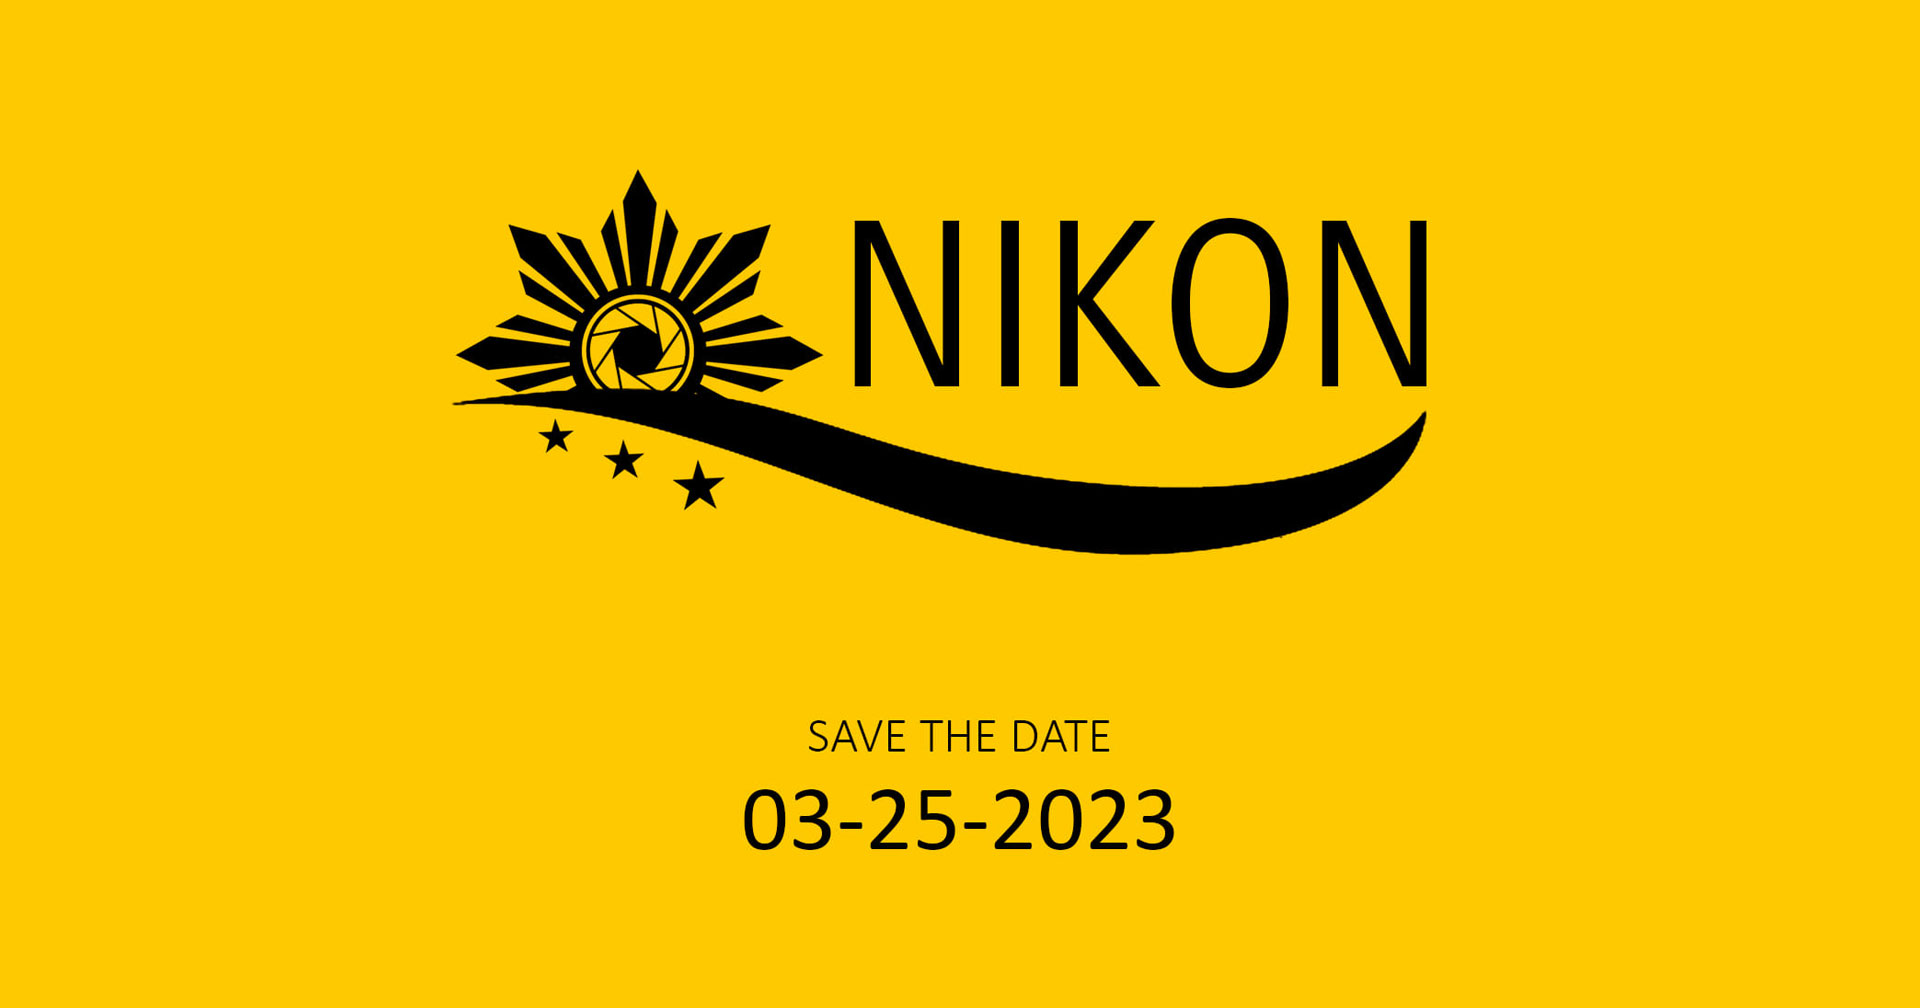 Nikon Philippines ปล่อย teaser ใหม่ 25 มีนาคม คาดอาจจะเปิดตัว Nikon Z8